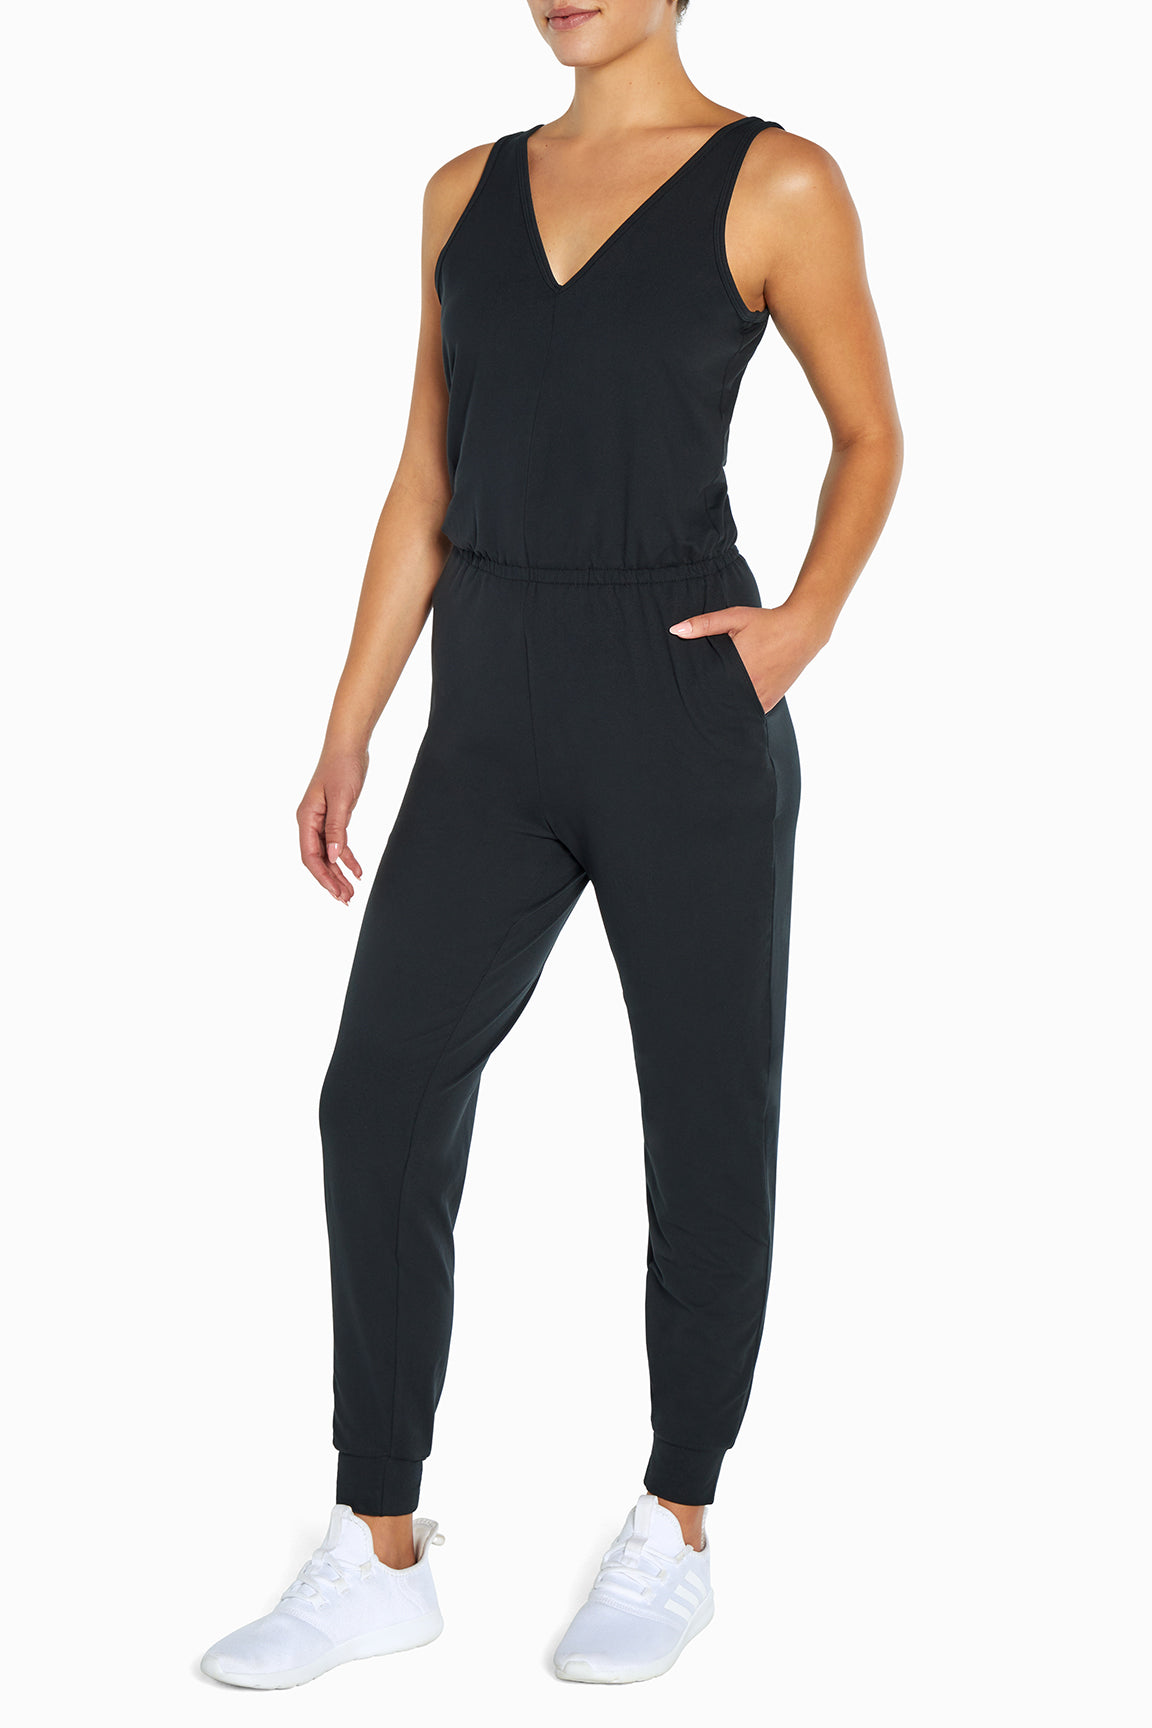 Marika Hoodie Women XL Relaxed Fit Sport Activewear Black Gray Sleeveless